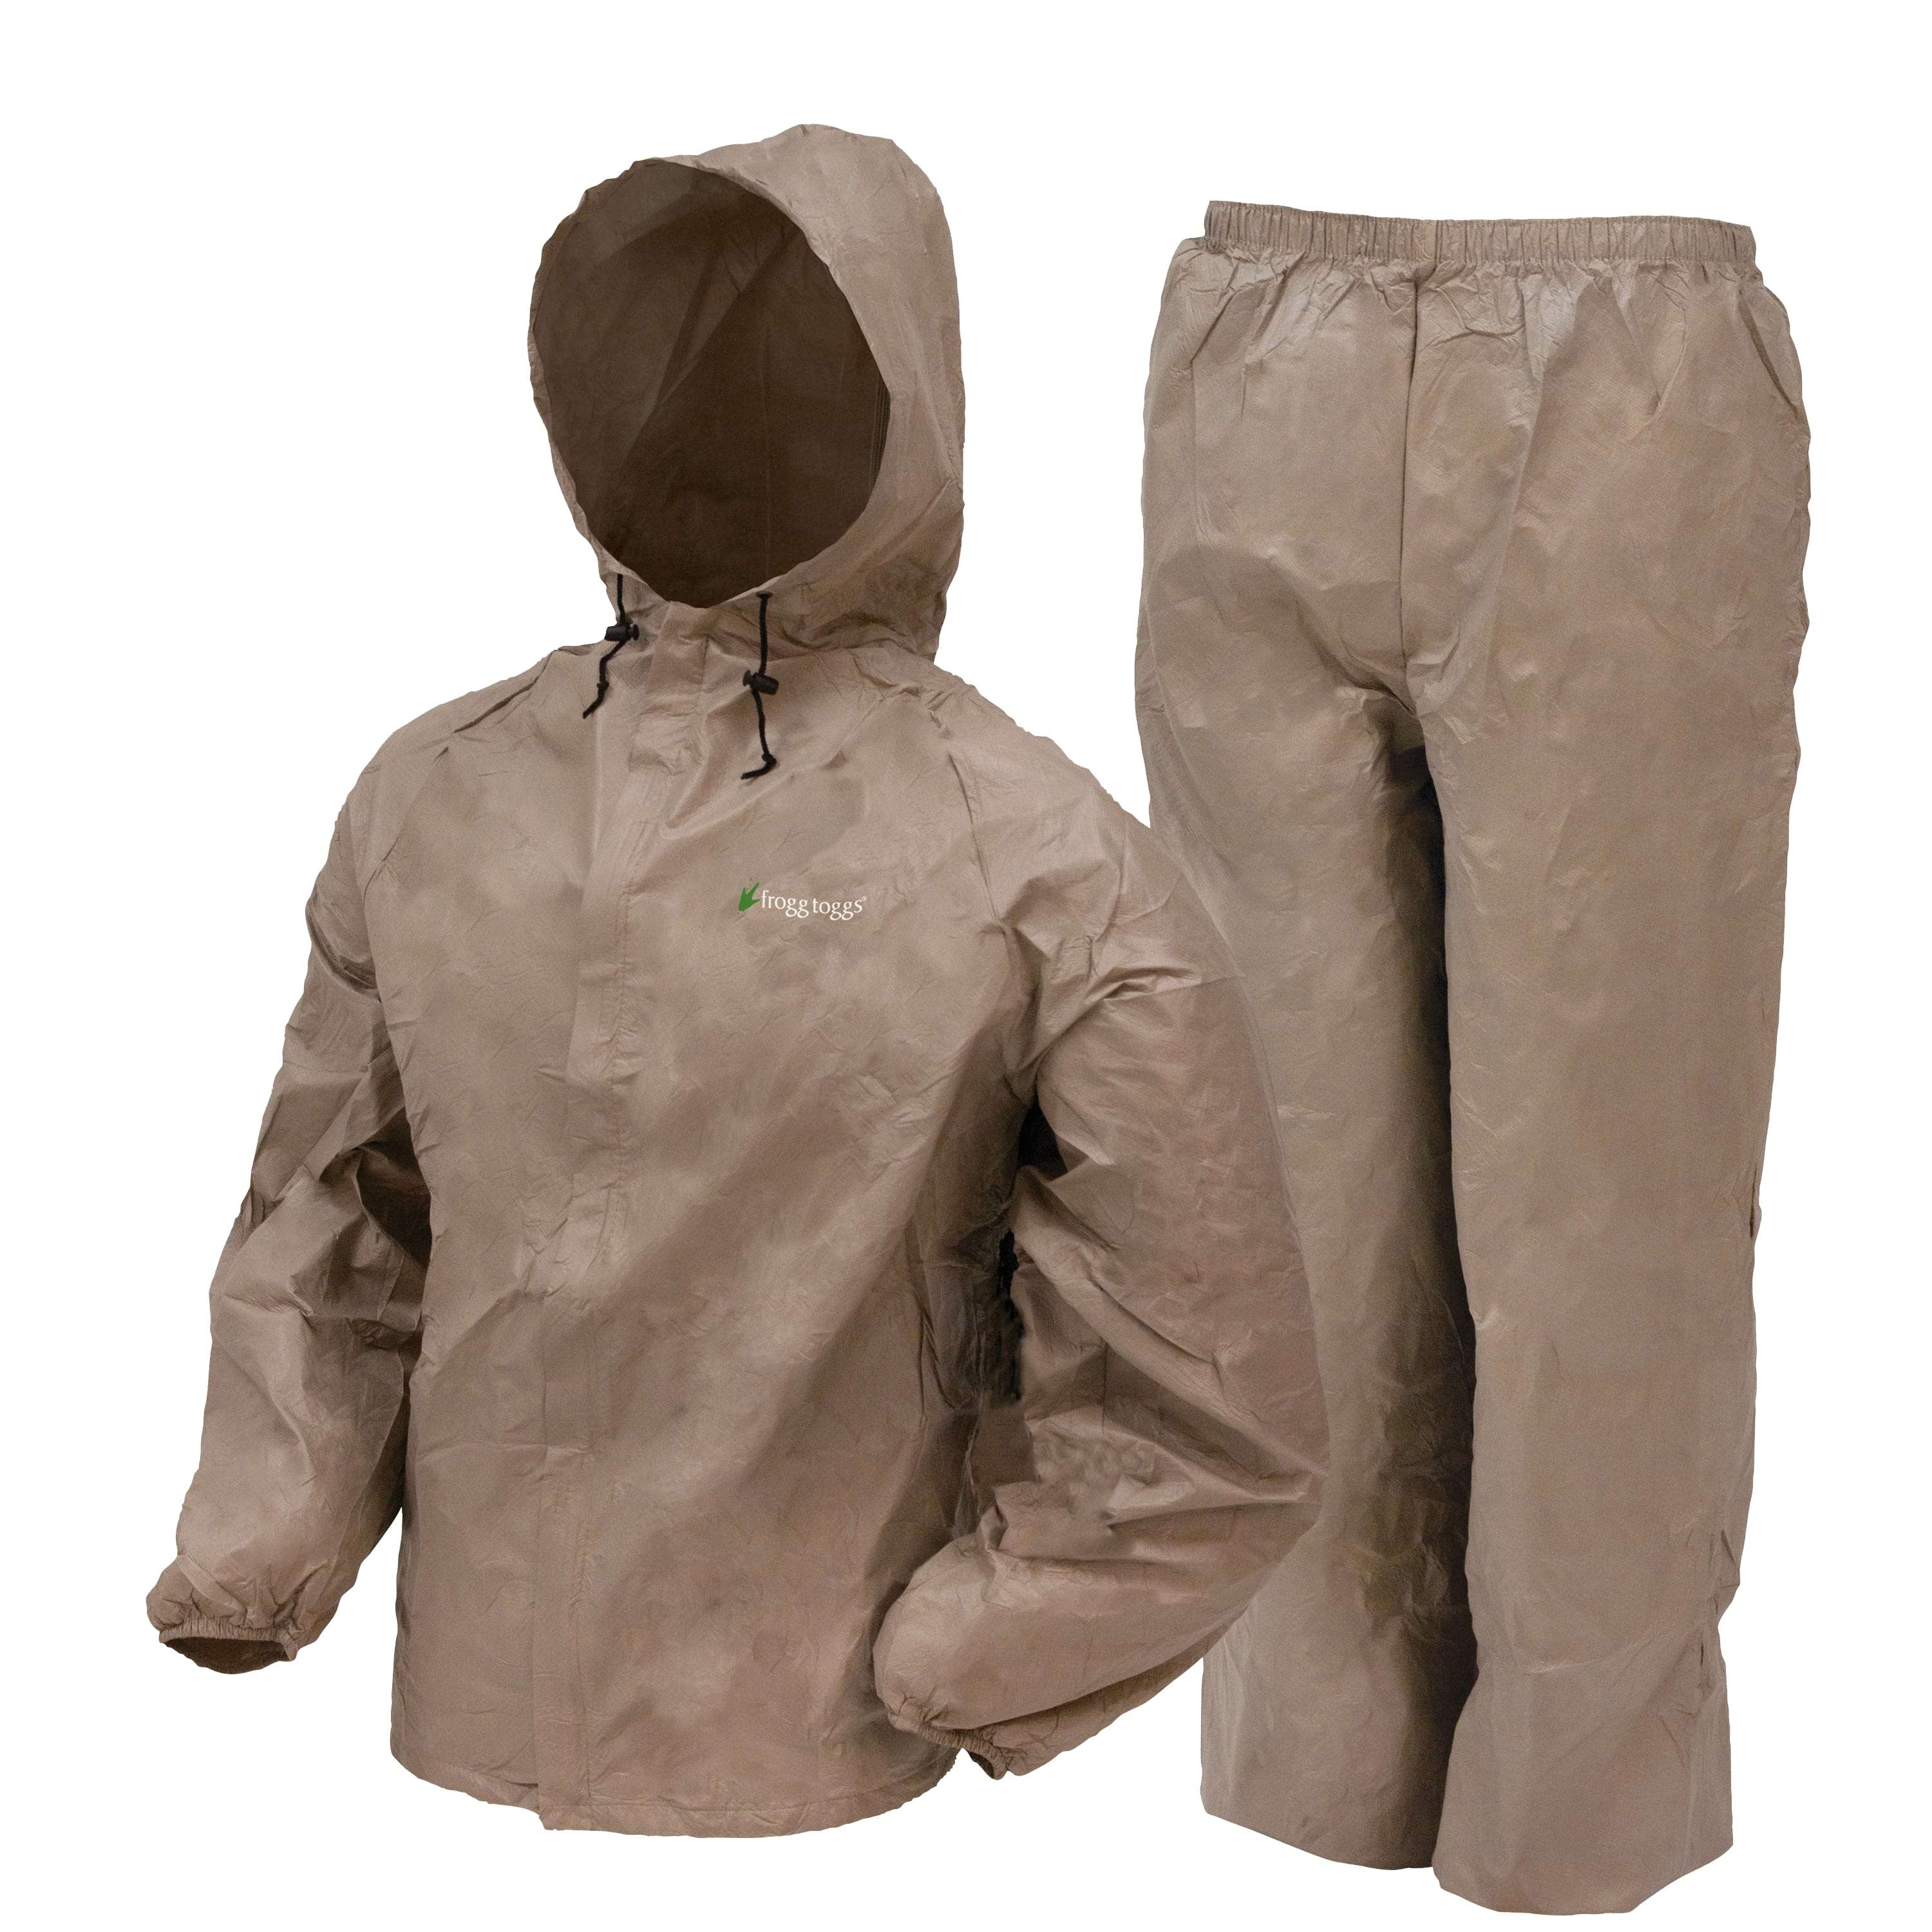 Frogg Toggs Ultra Lite Rain Suit in Khaki (Men's) - image 1 of 6